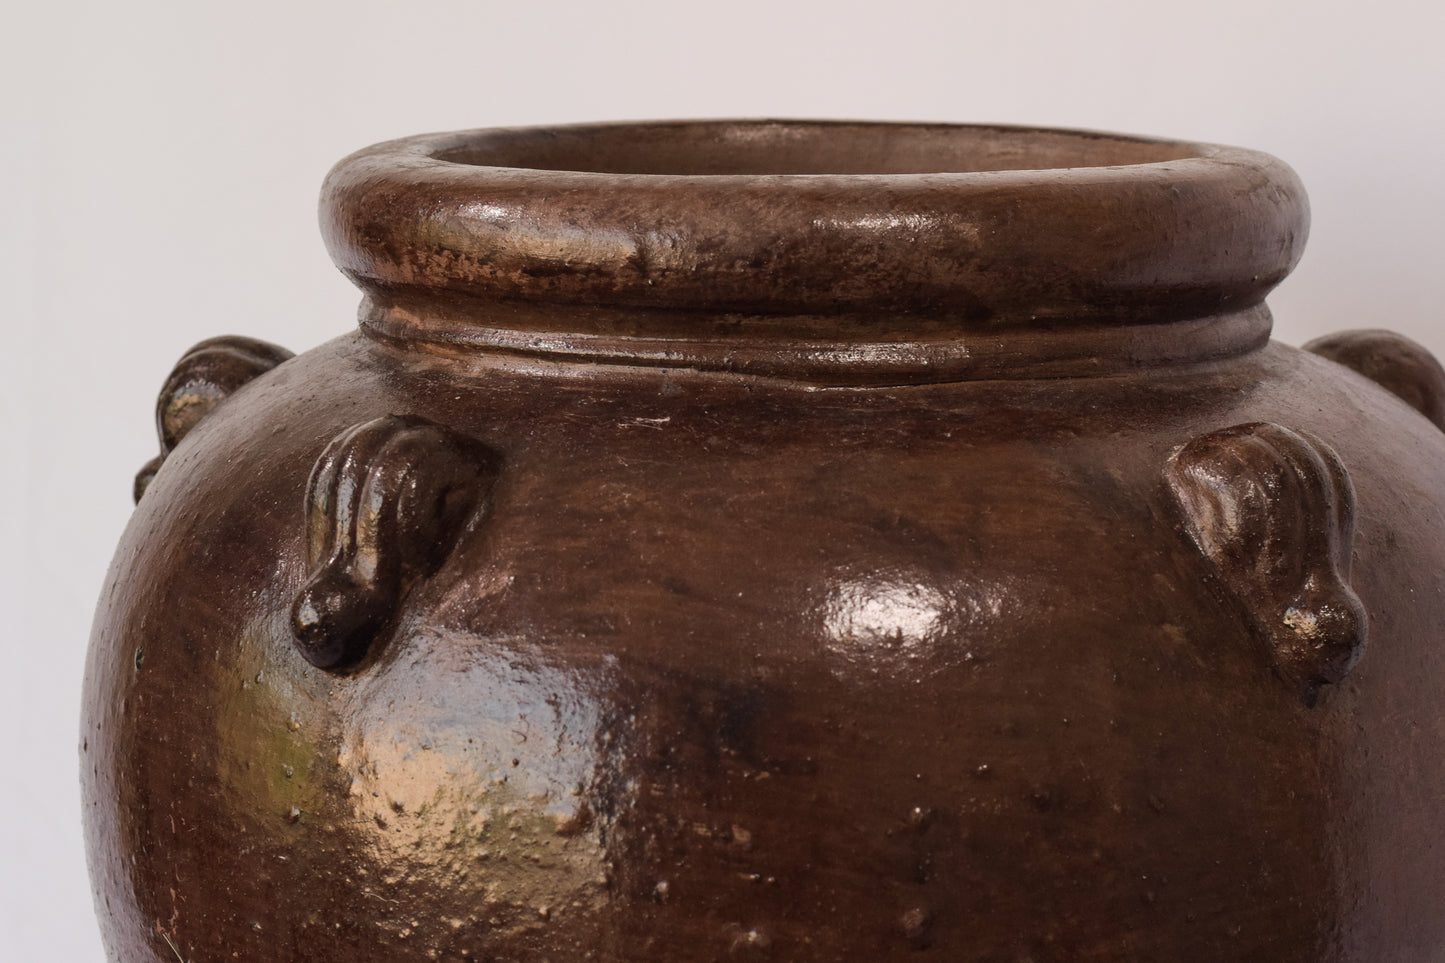 Large Stoneware Pot